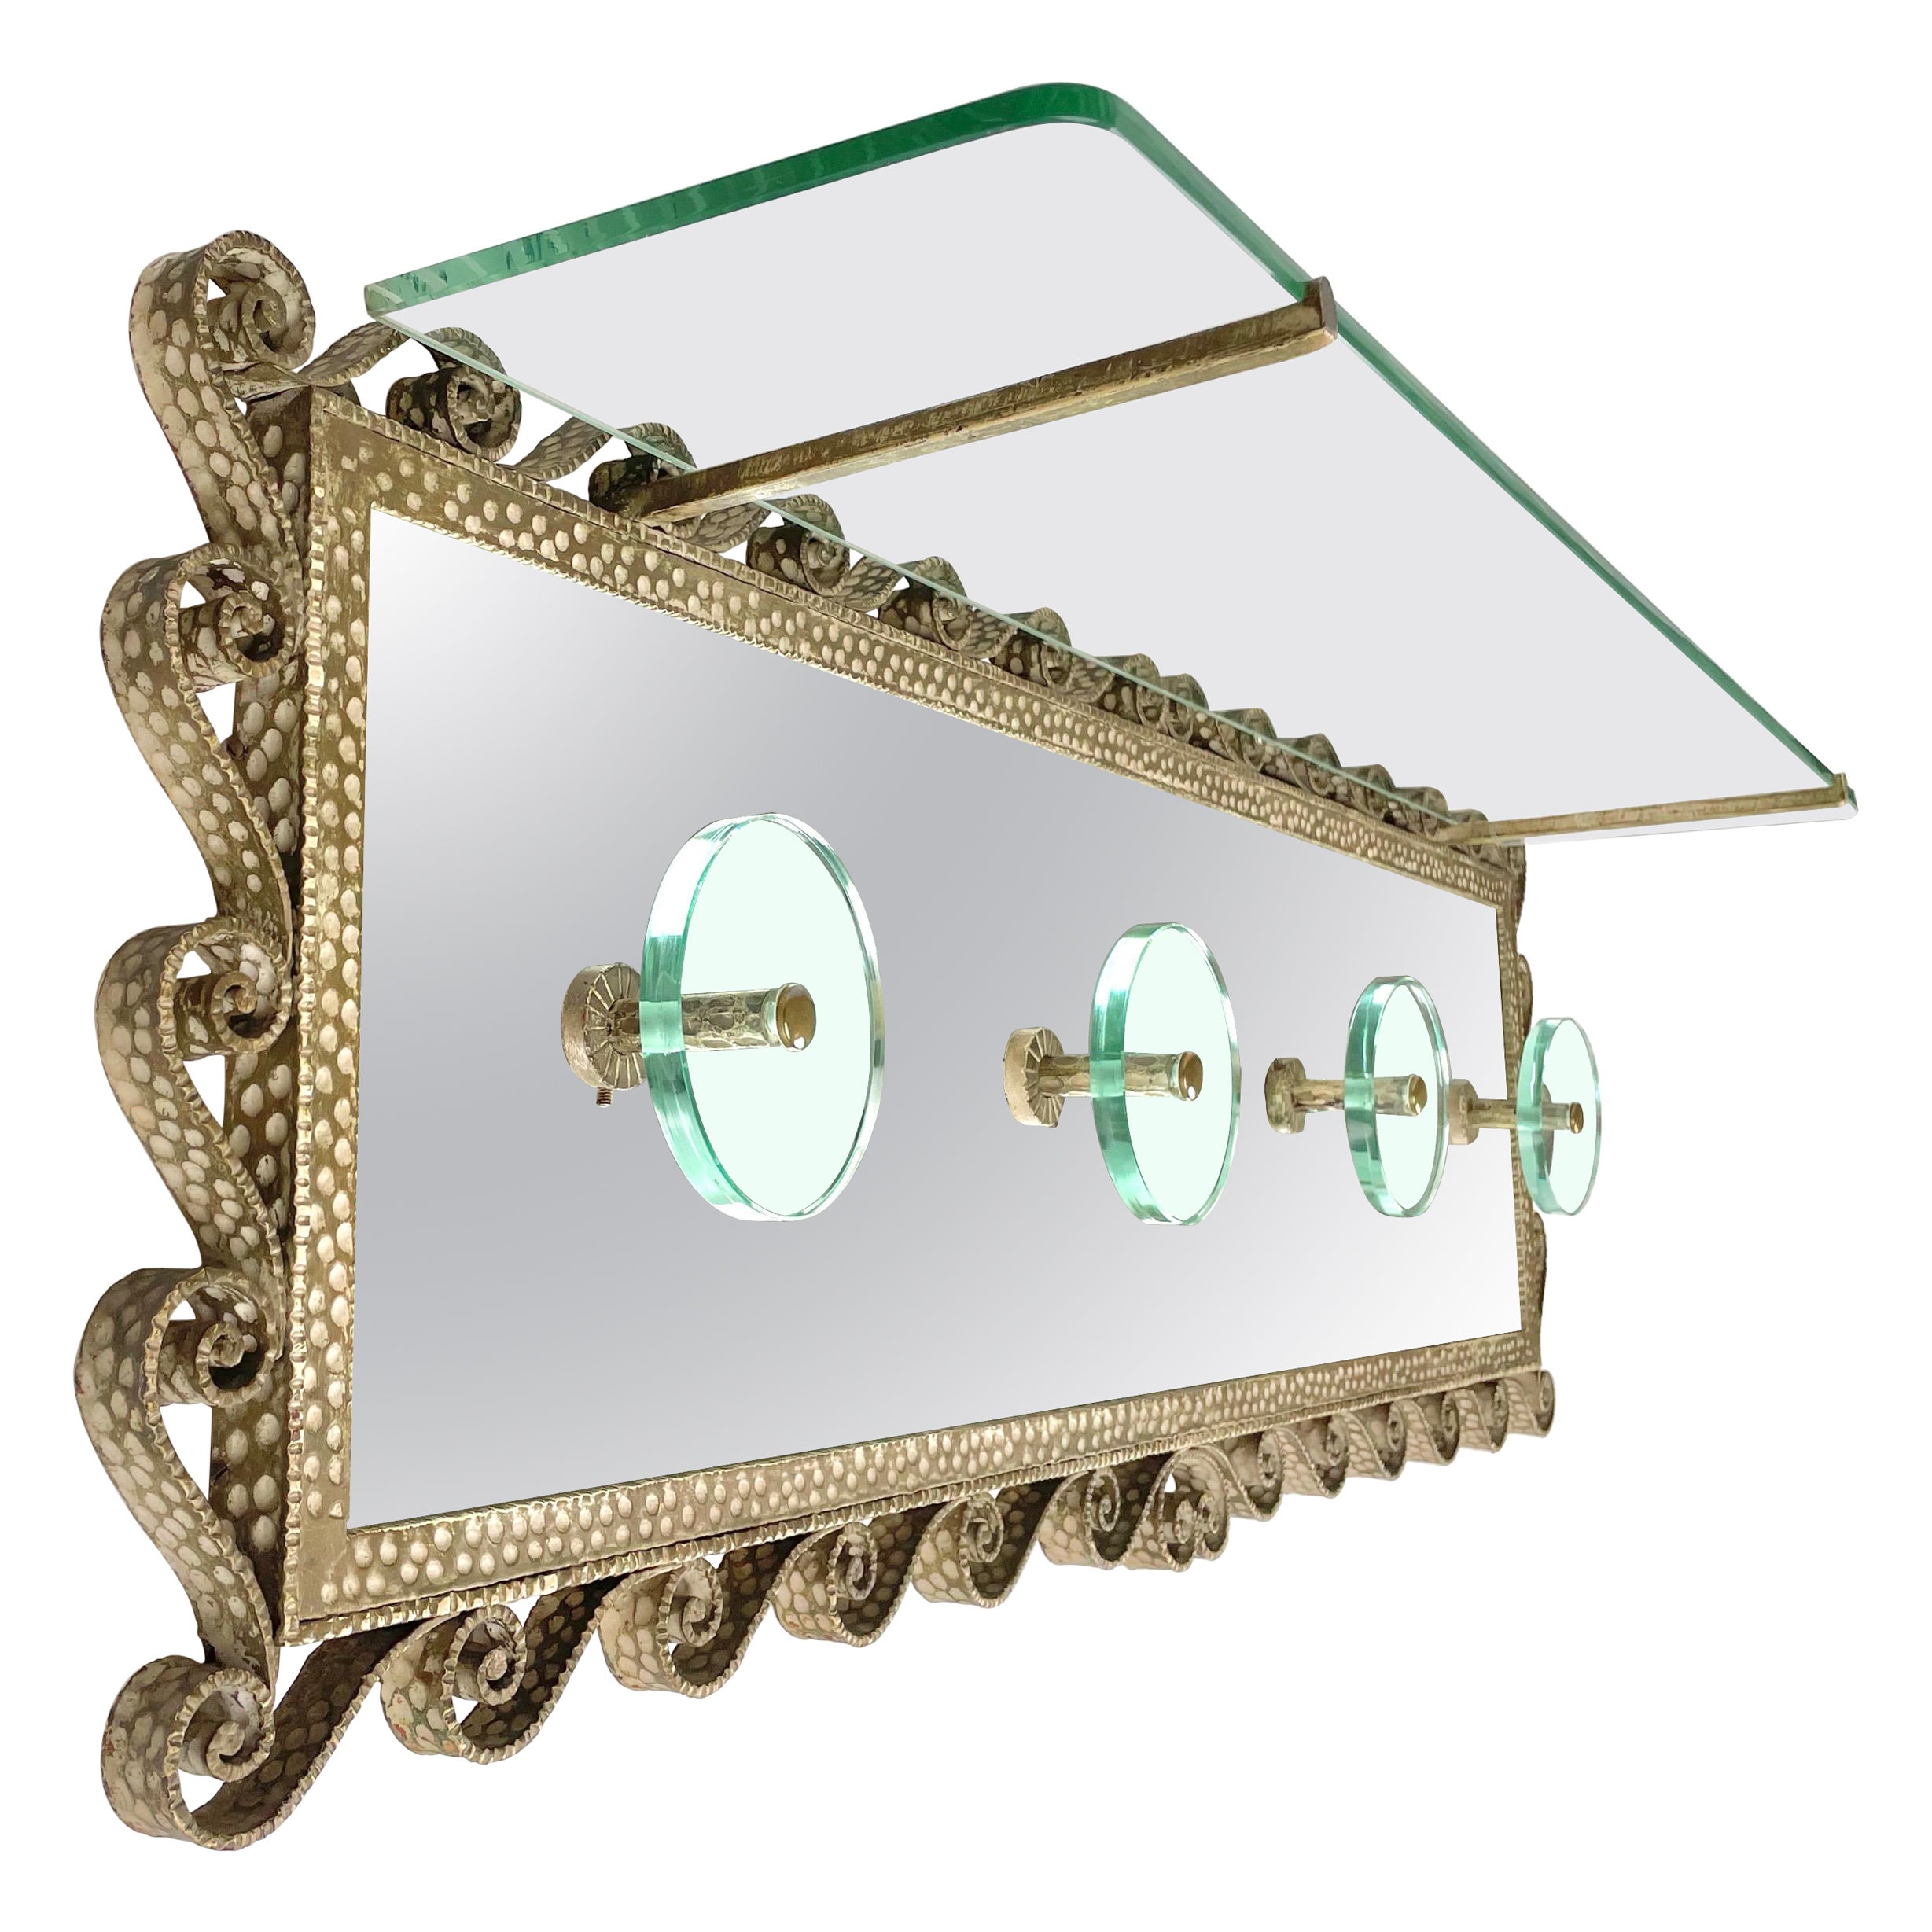 Pier Luigi Colli for Cristal Art Coat Rack Stand Iron Mirror Glass Italy 1950s